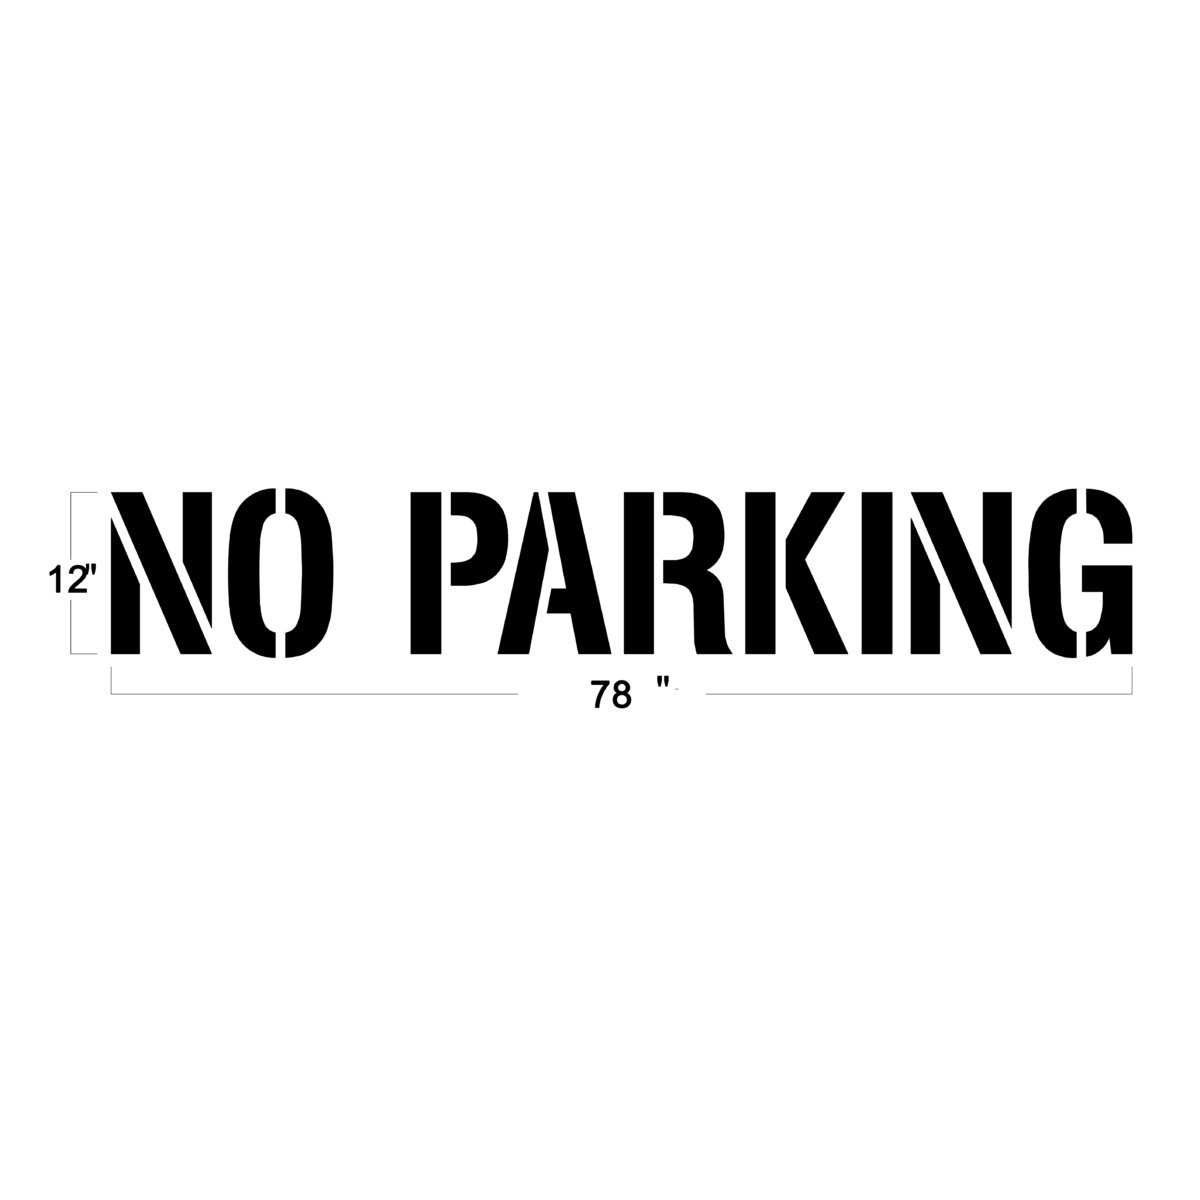 Newstripe Parking Lot Starter Kits